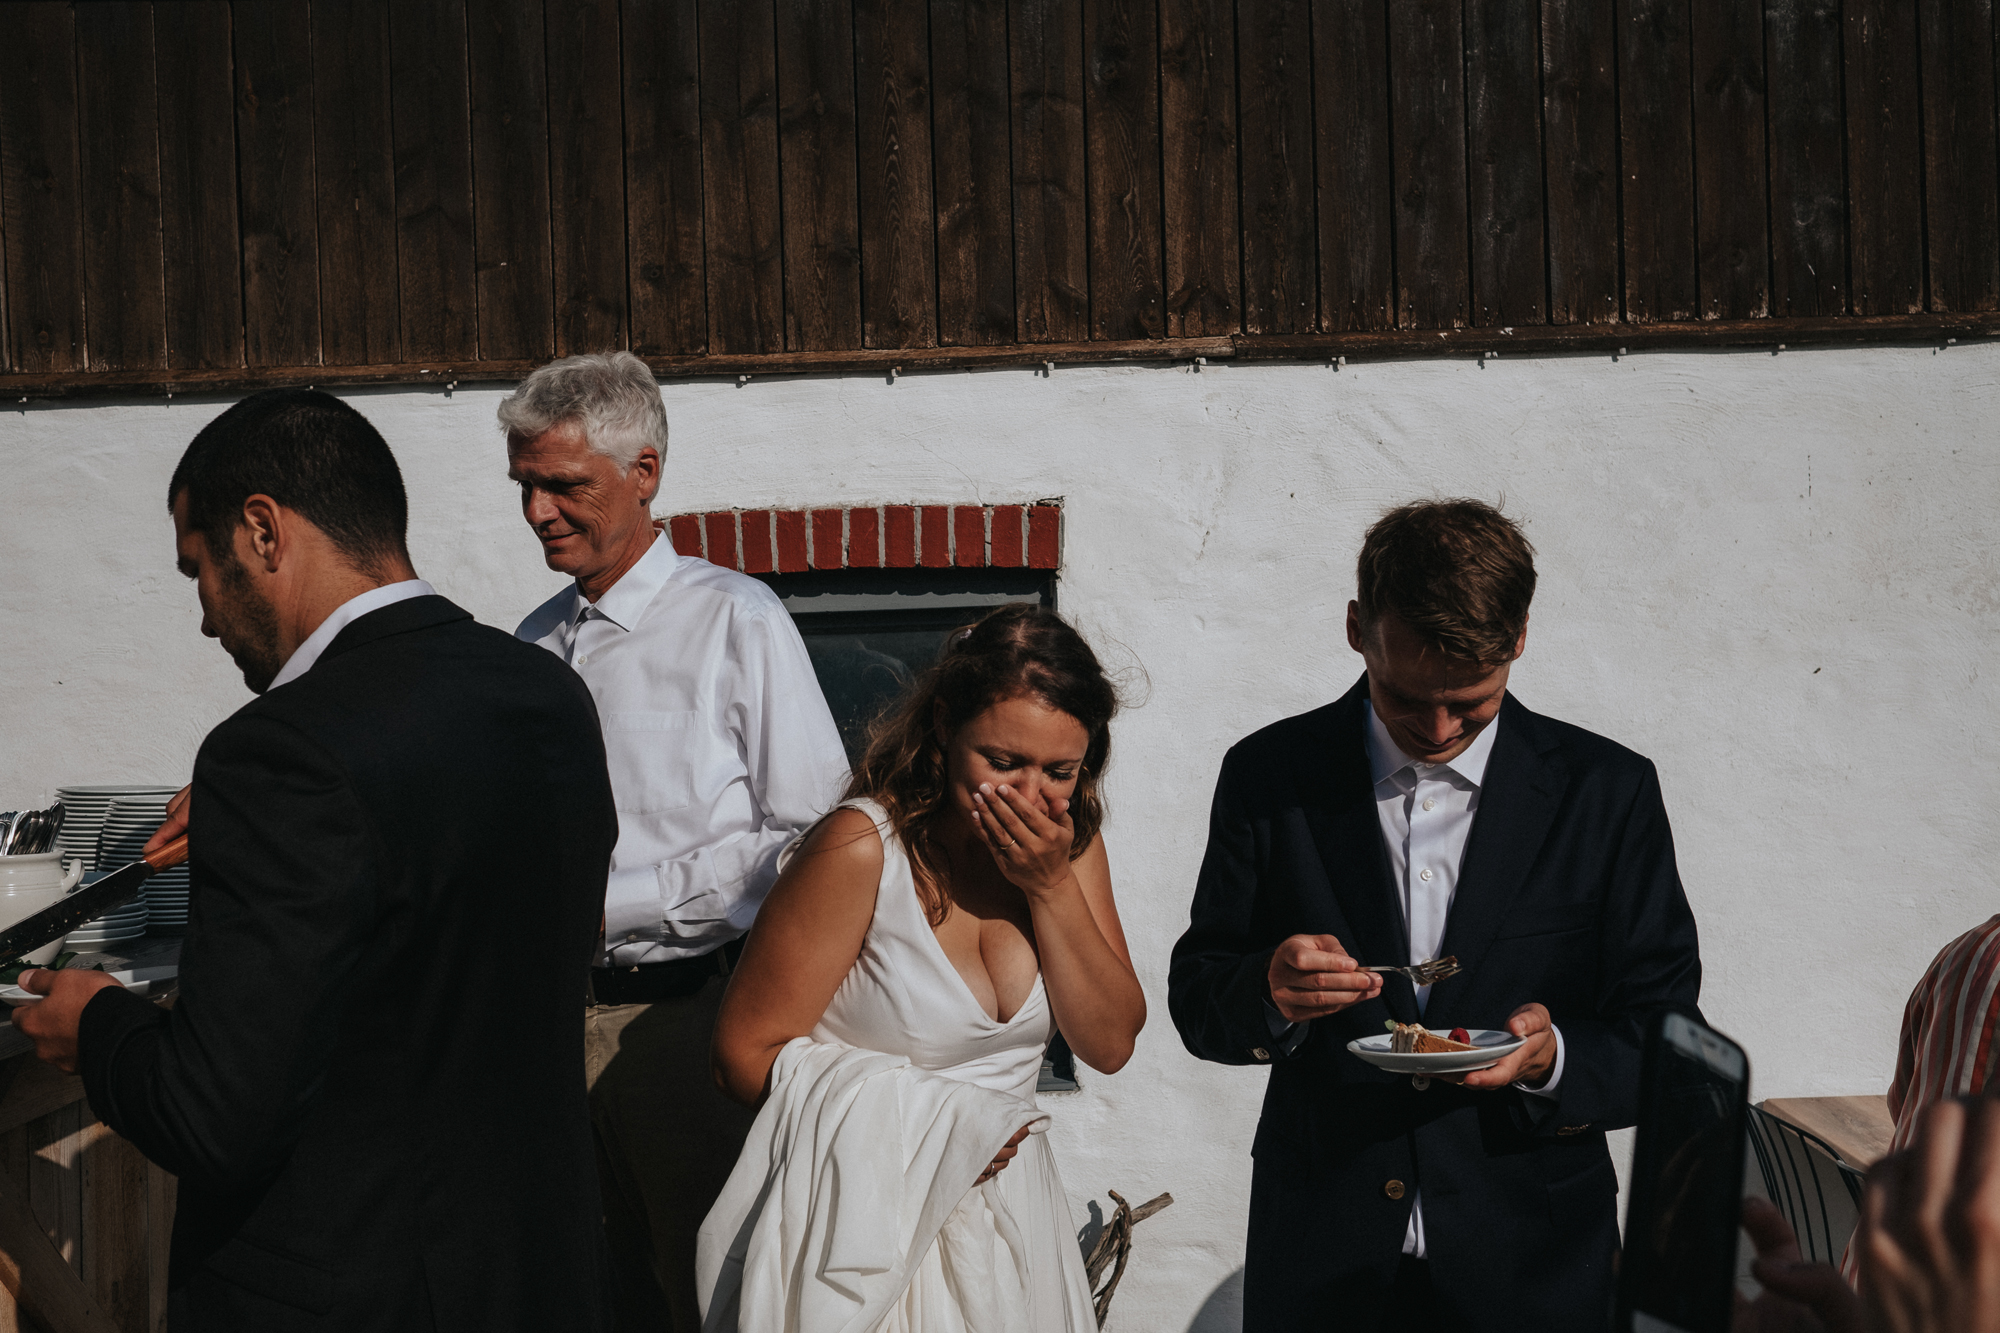 049-bröllop-gåsemora-gårdskrog-neas-fotografi.jpg